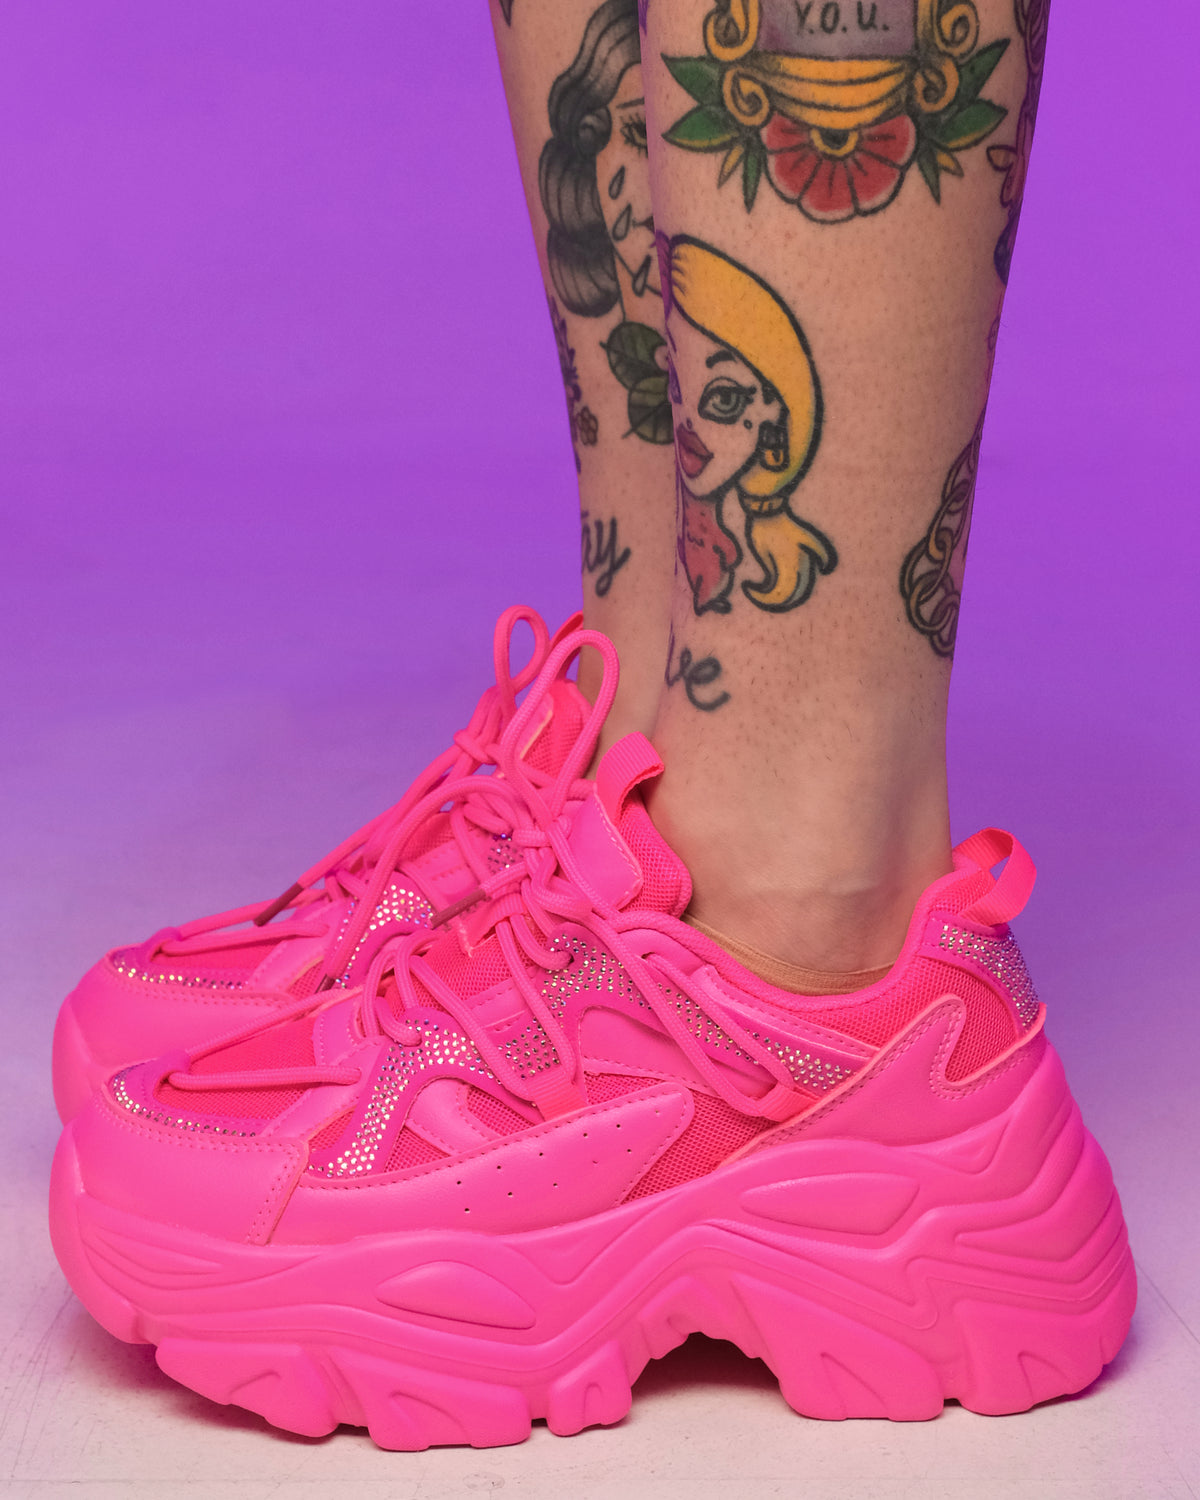 Chunky Sneakers - Bright pink - Ladies